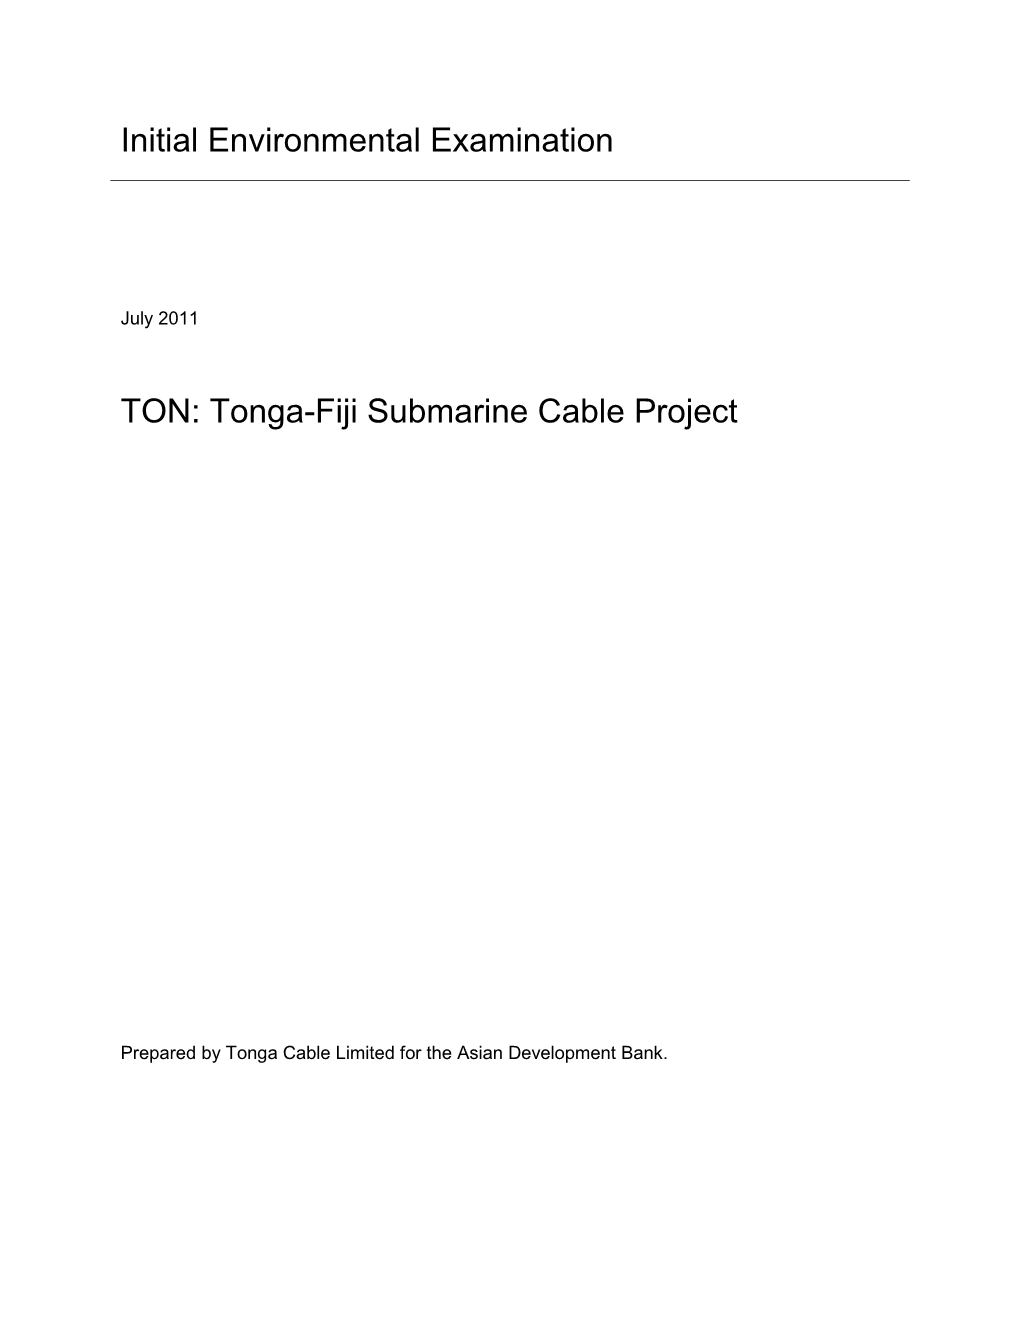 Tonga-Fiji Submarine Cable Project